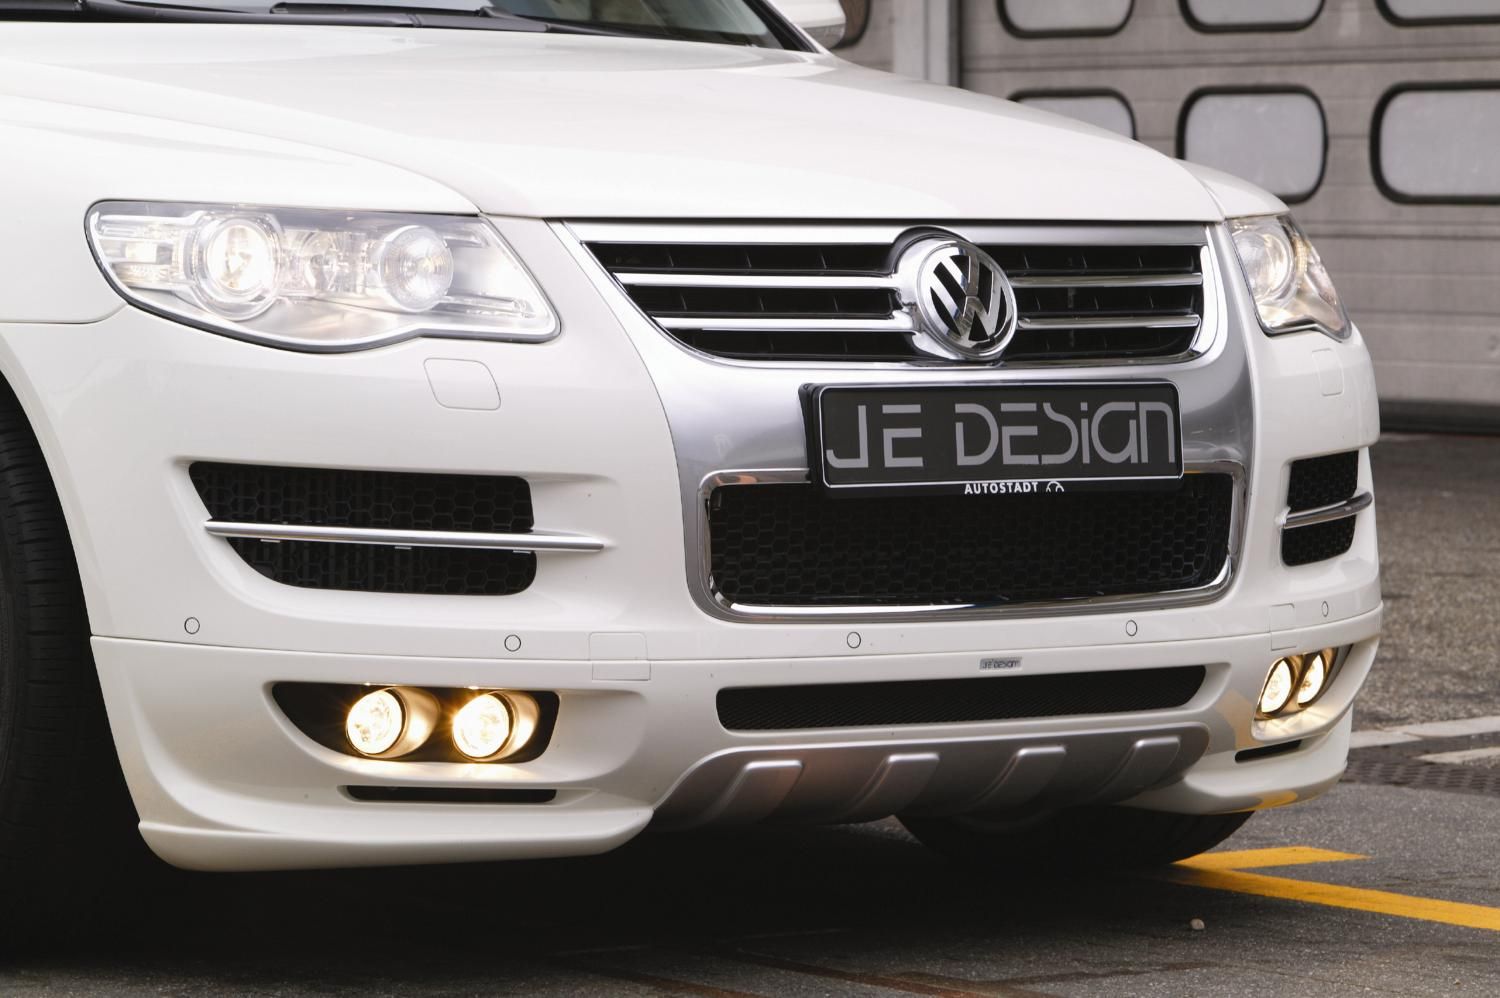 2007 - 1999 Volkswagen Touareg Facelift by Je Design